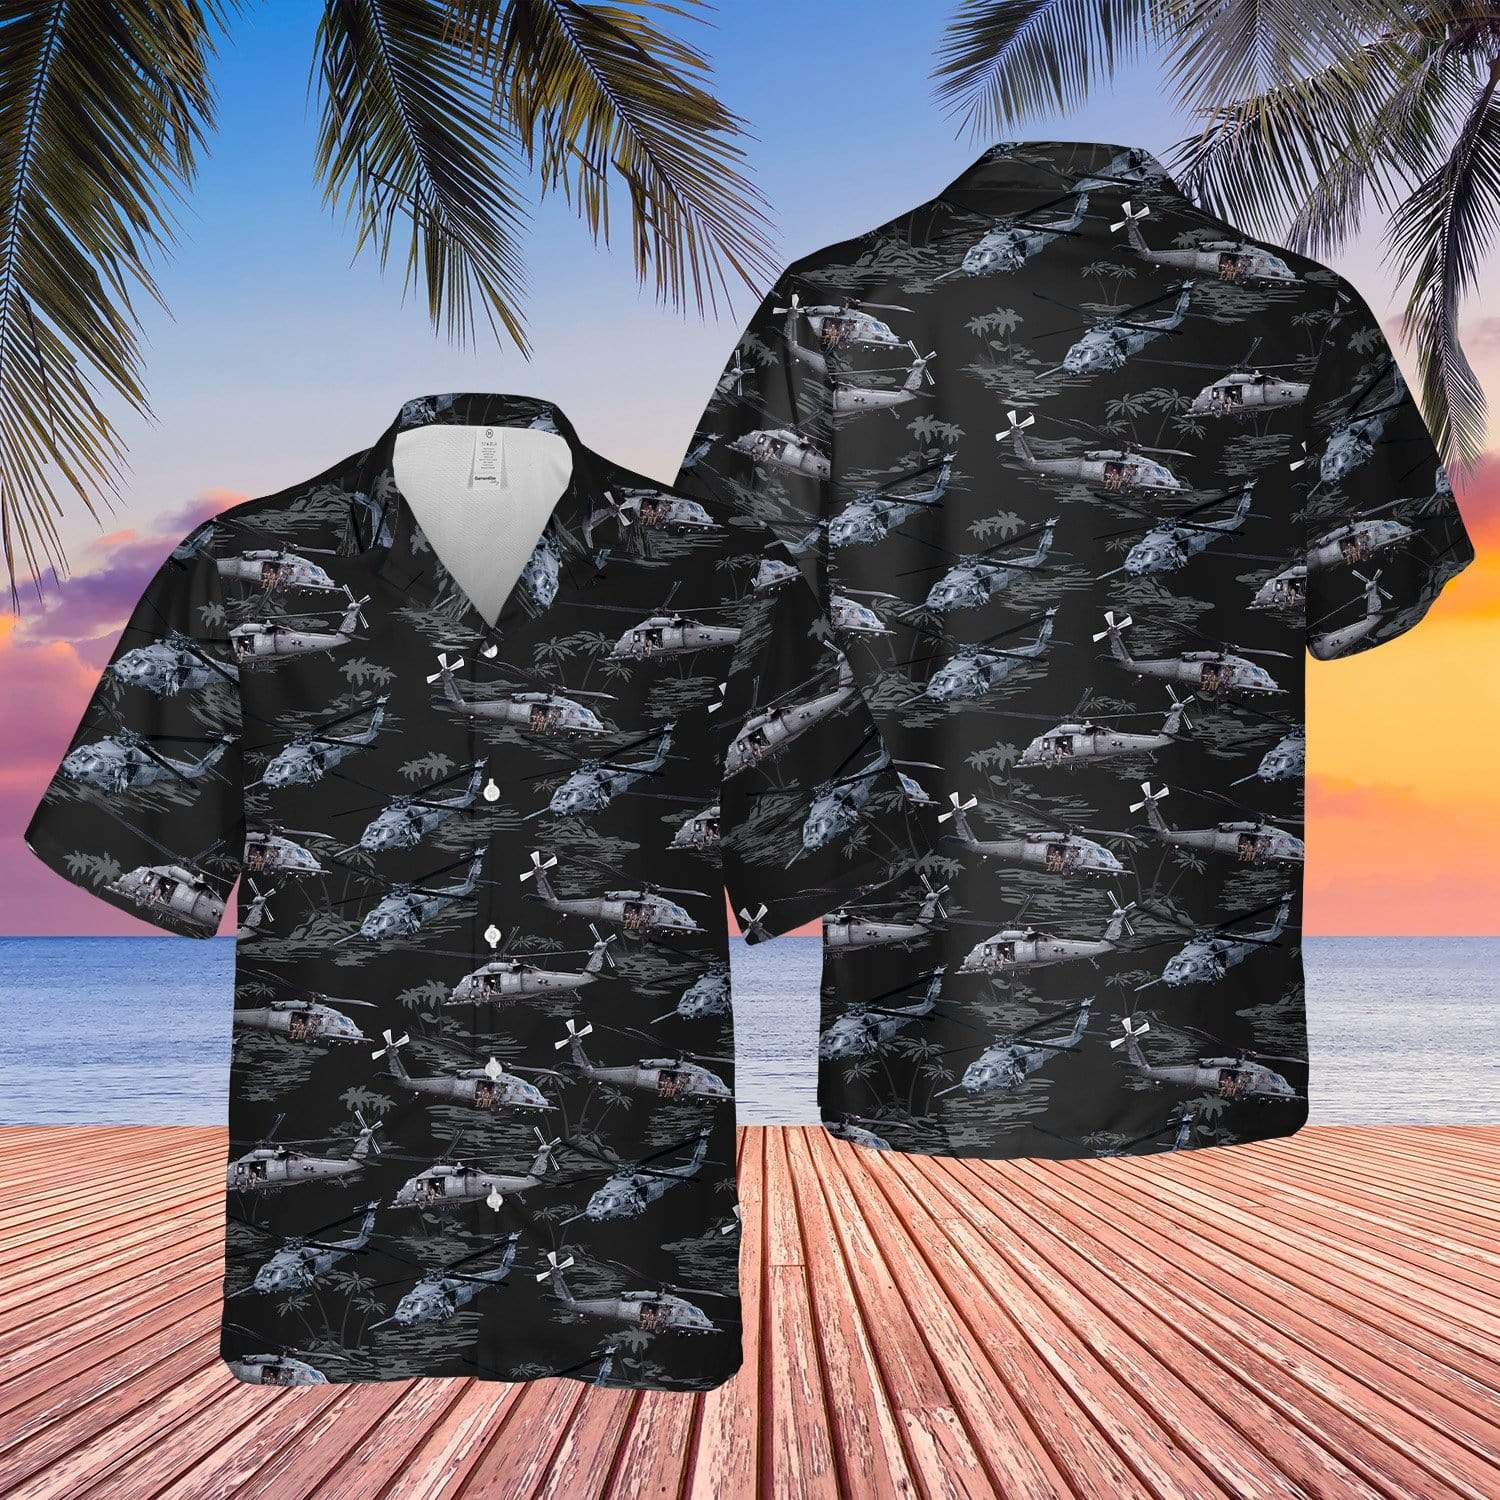 kurobase-amazing-black-us-air-force-sikorsky-hh-60-pave-hawk-hawaiian-shirts.jpg